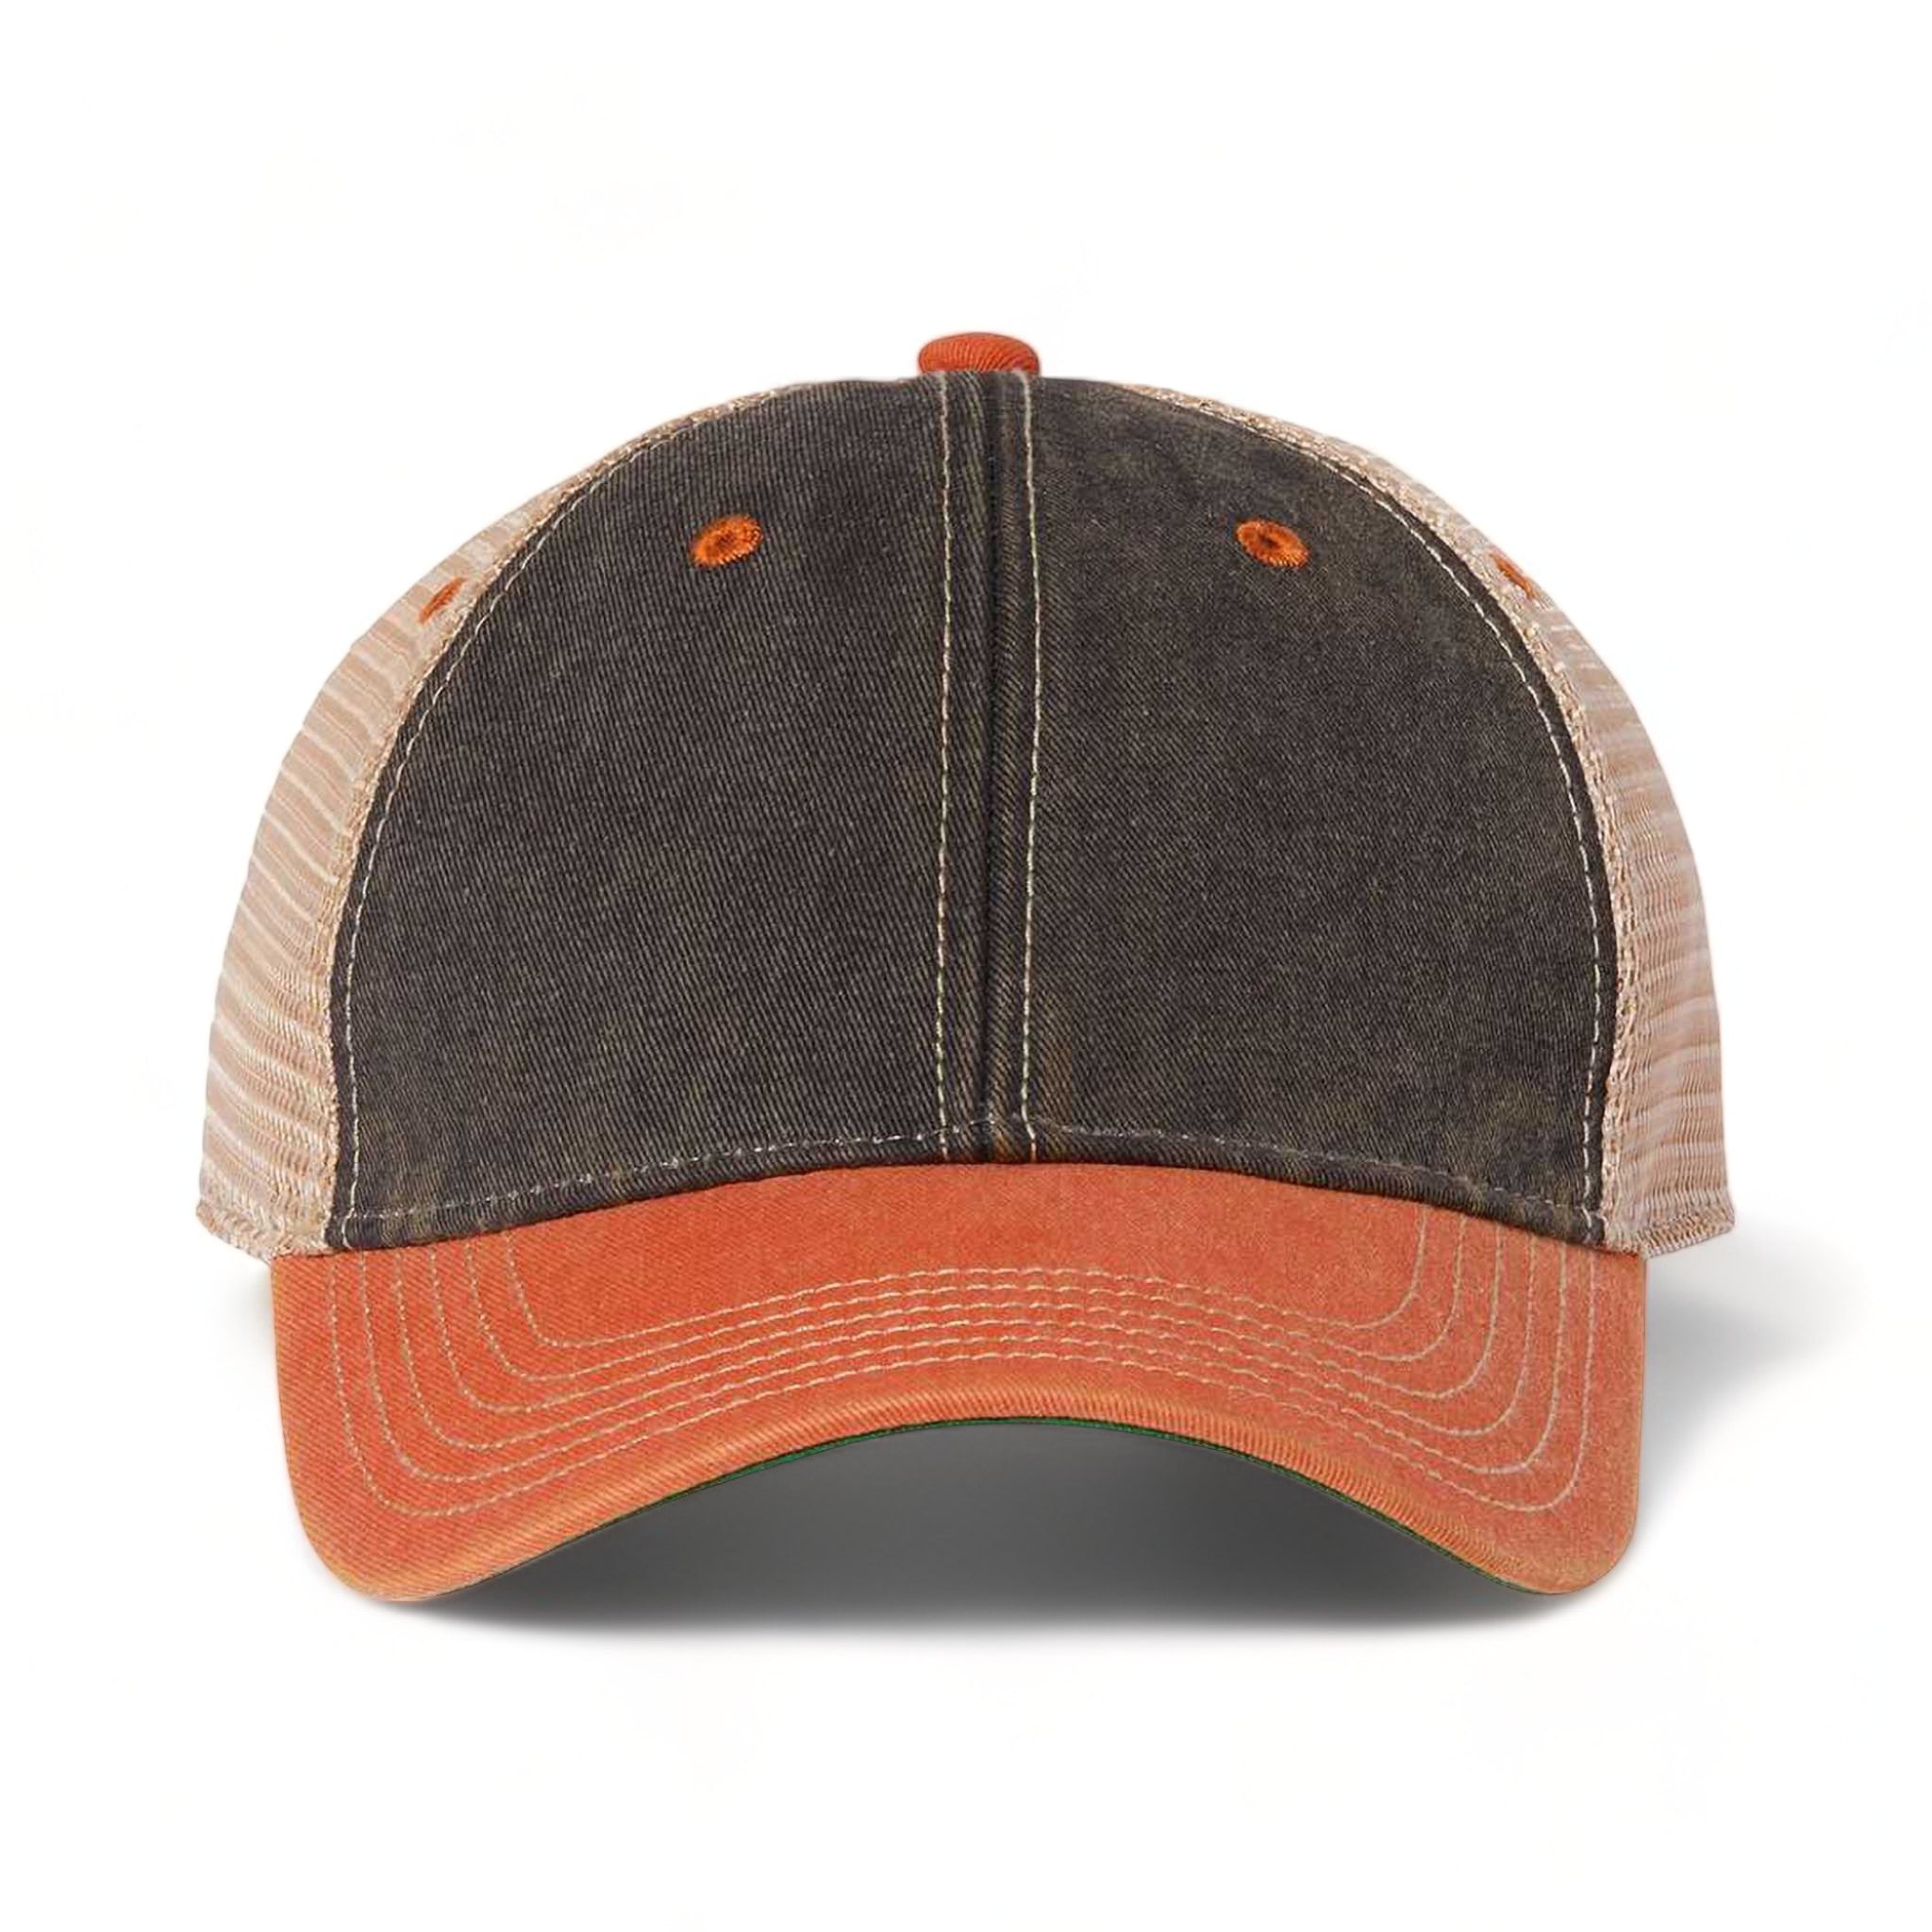 Front view of LEGACY OFA custom hat in black, orange and khaki